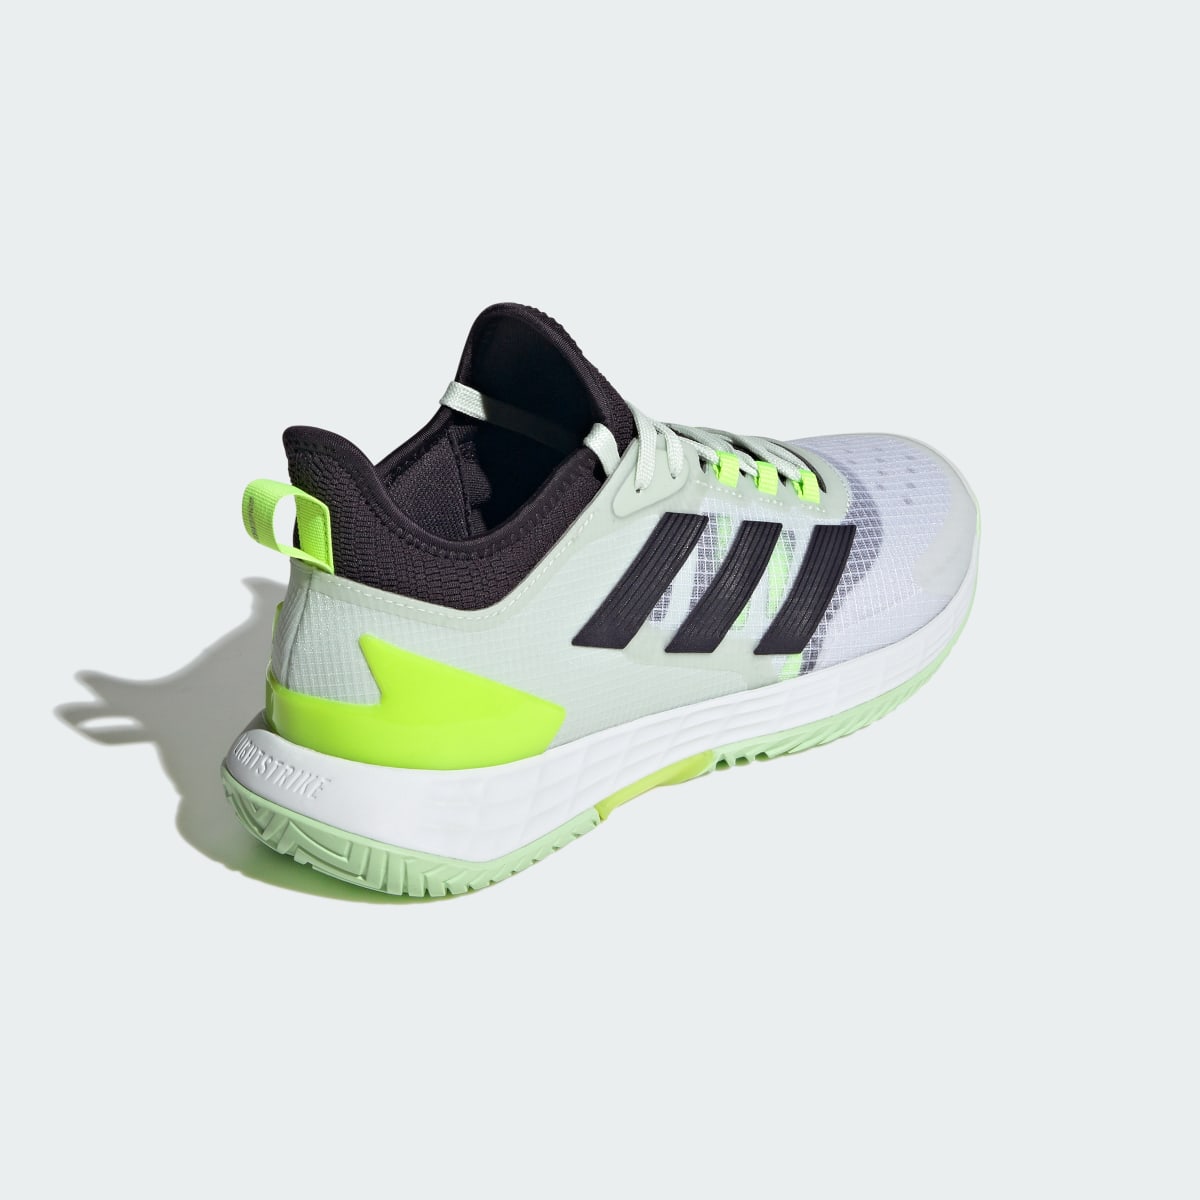 Adidas Scarpe da tennis adizero Ubersonic 4.1. 9